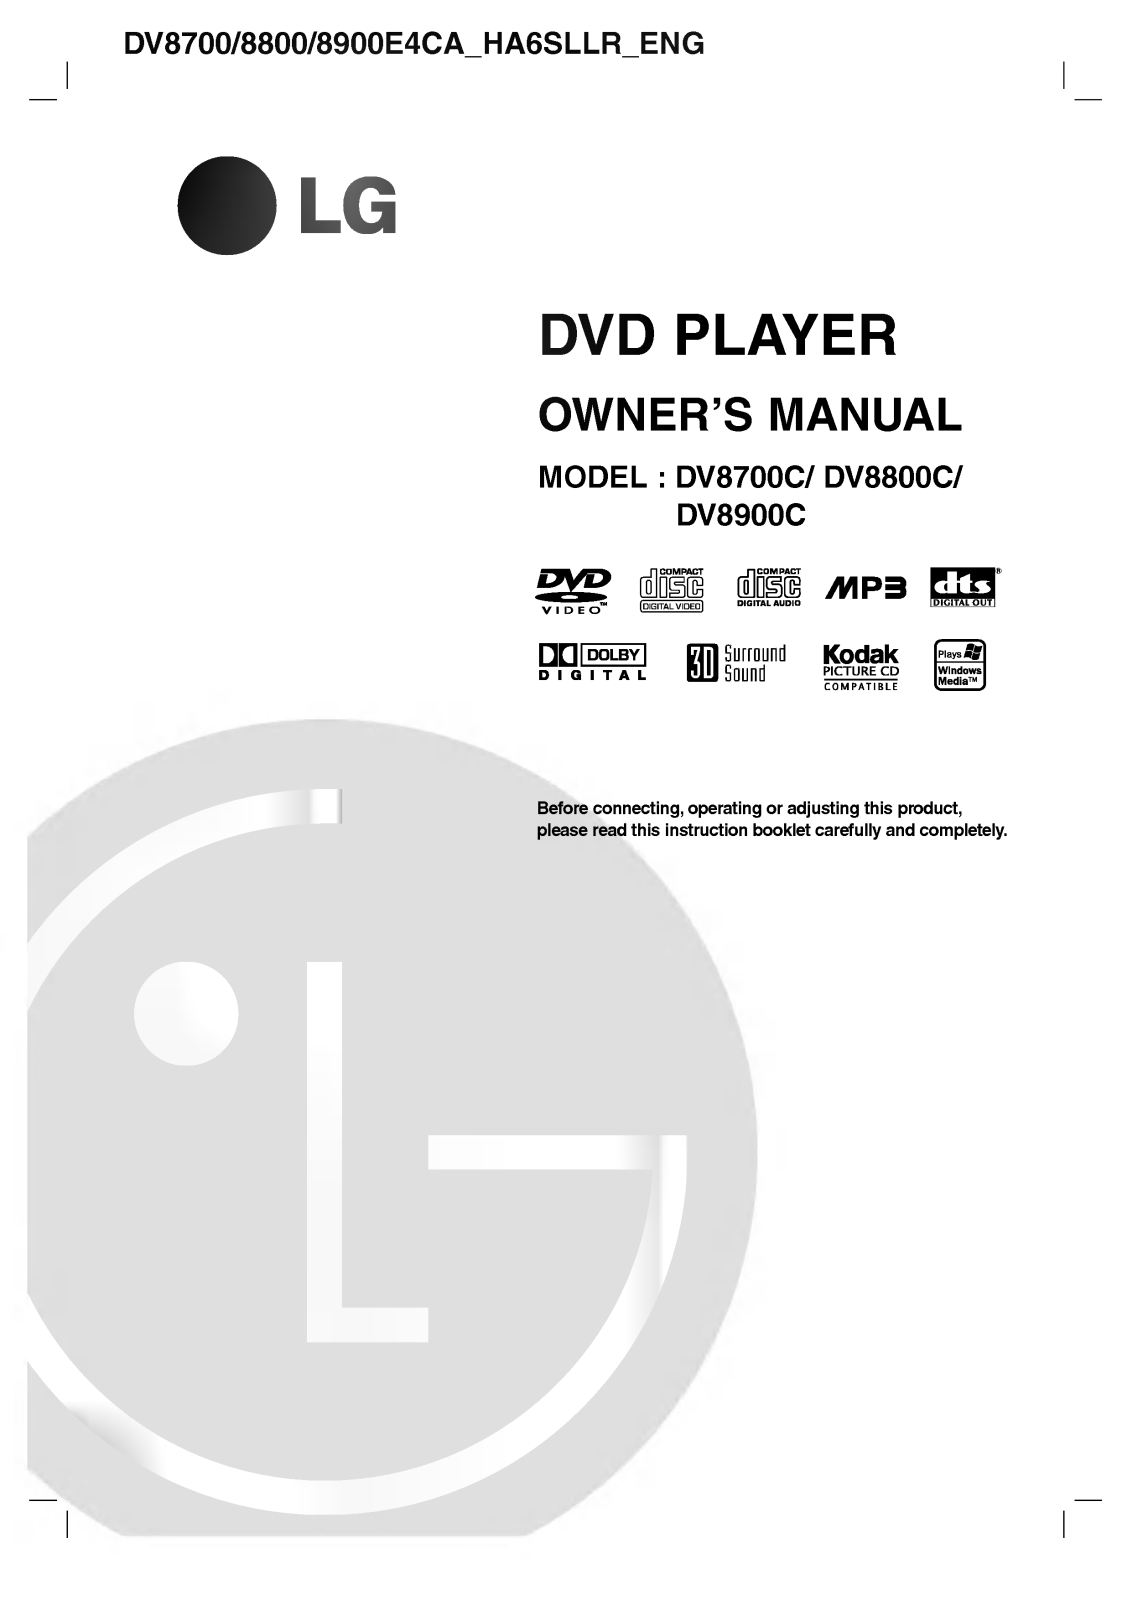 LG DV8800E4CA User Manual